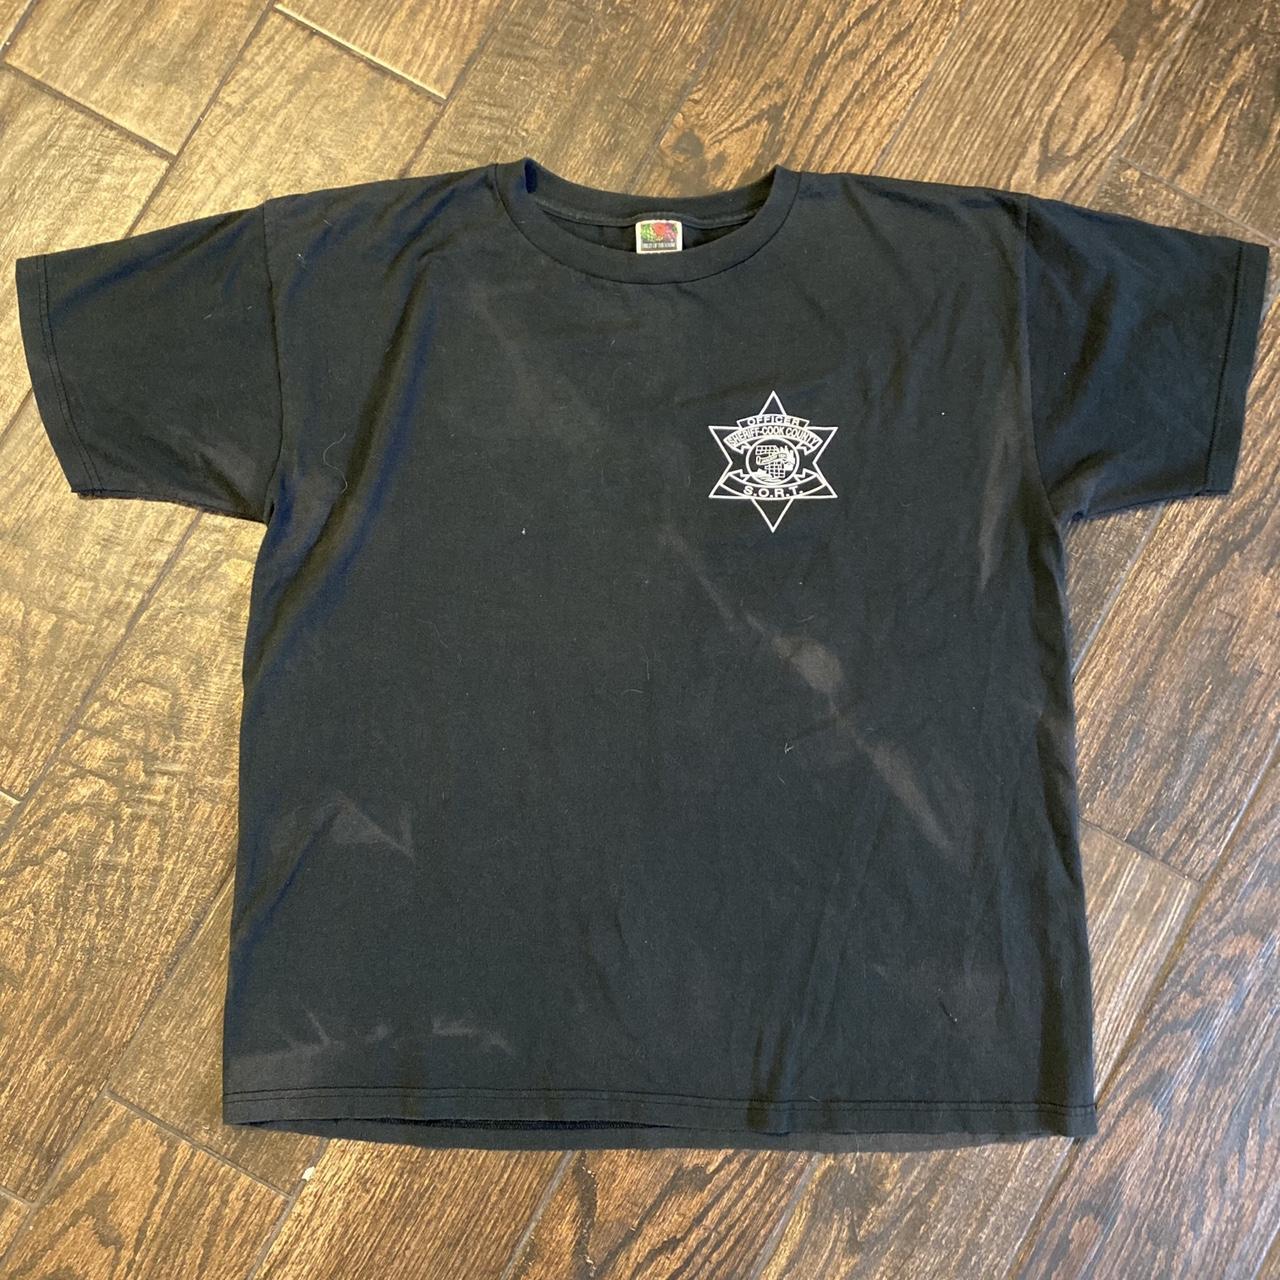 Police Men's Black and White T-shirt | Depop